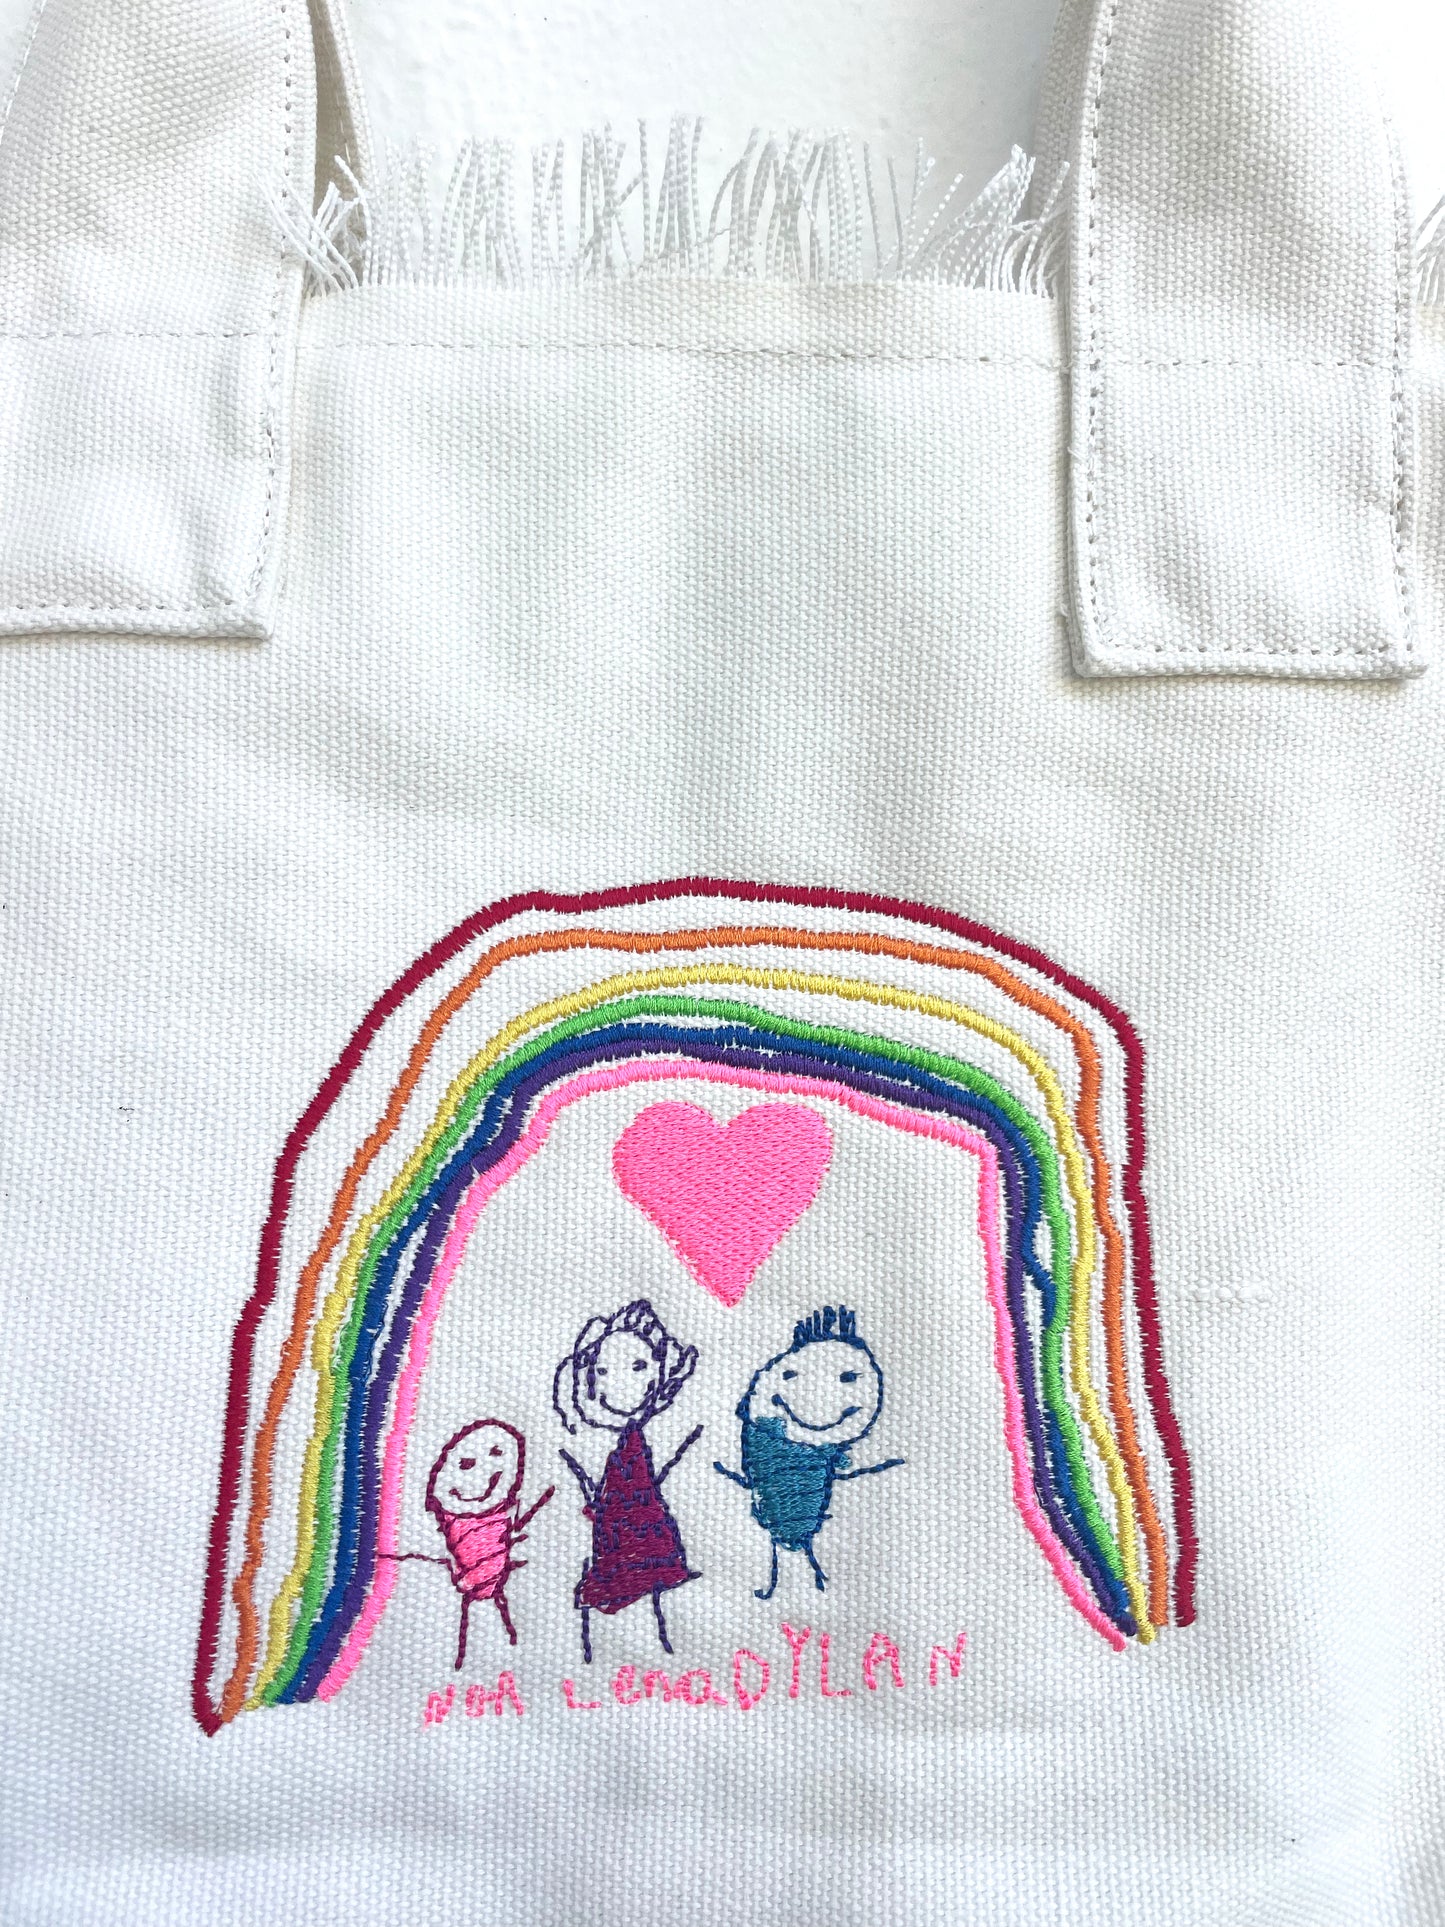 Kids Art Embroidered bag